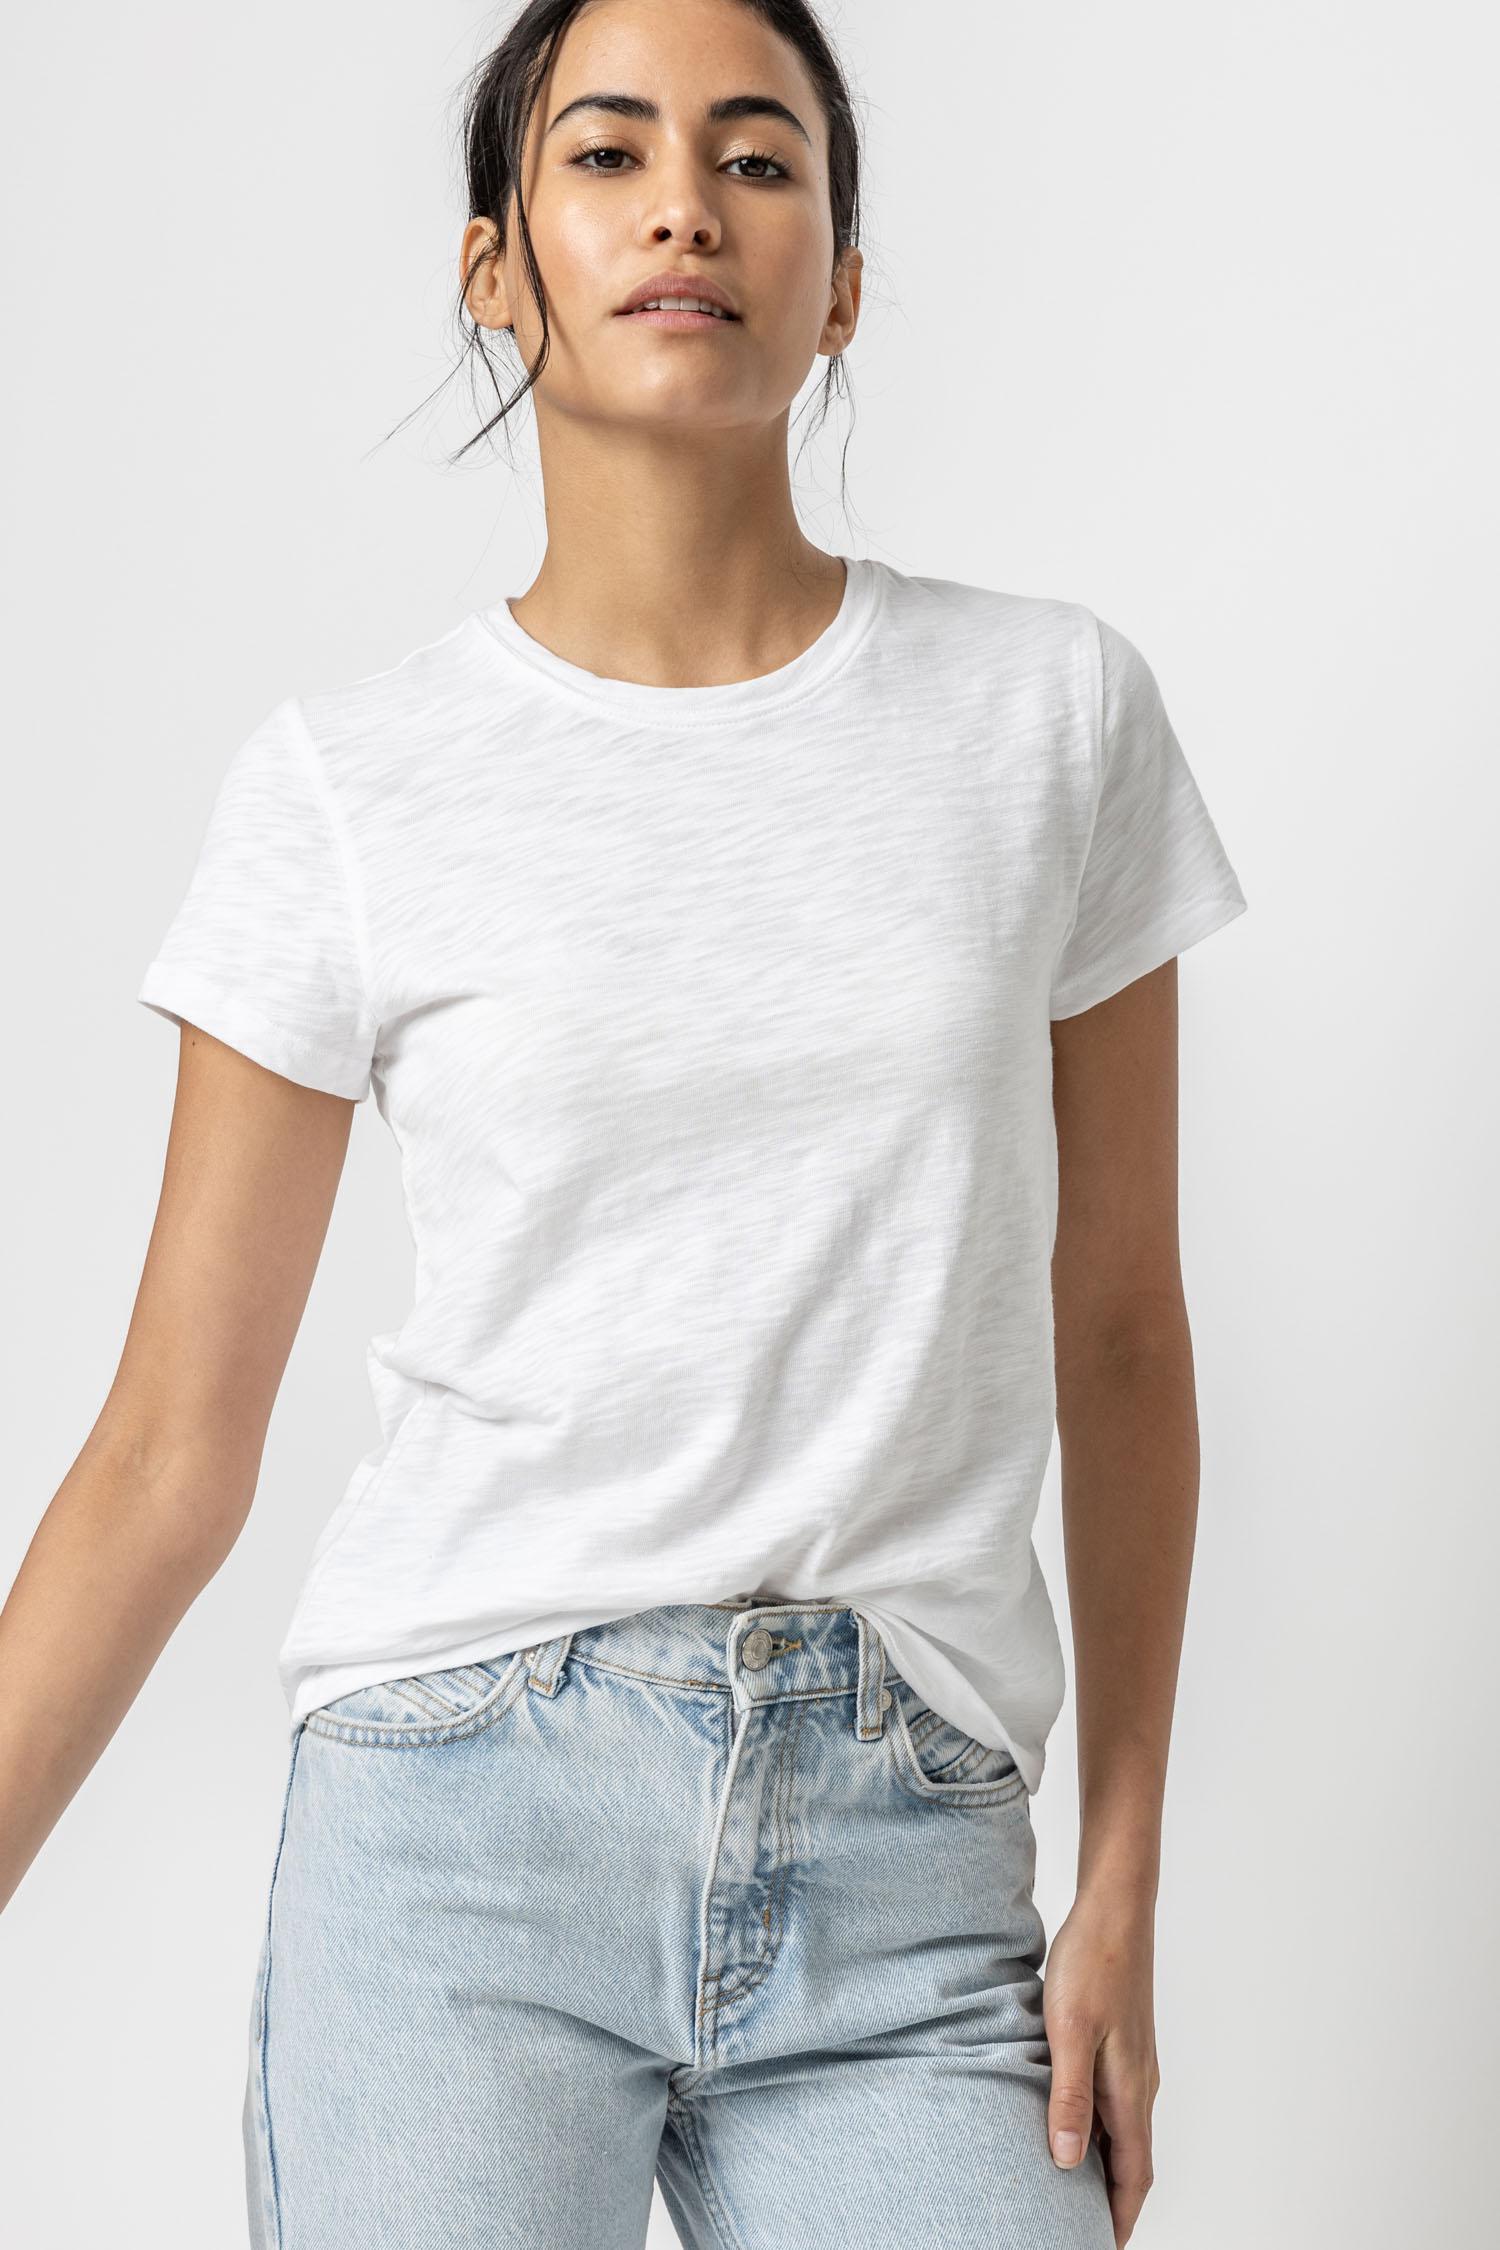 Cathalem Women's Softstyle Cotton T-Shirt Short Sleeve Crew Neck